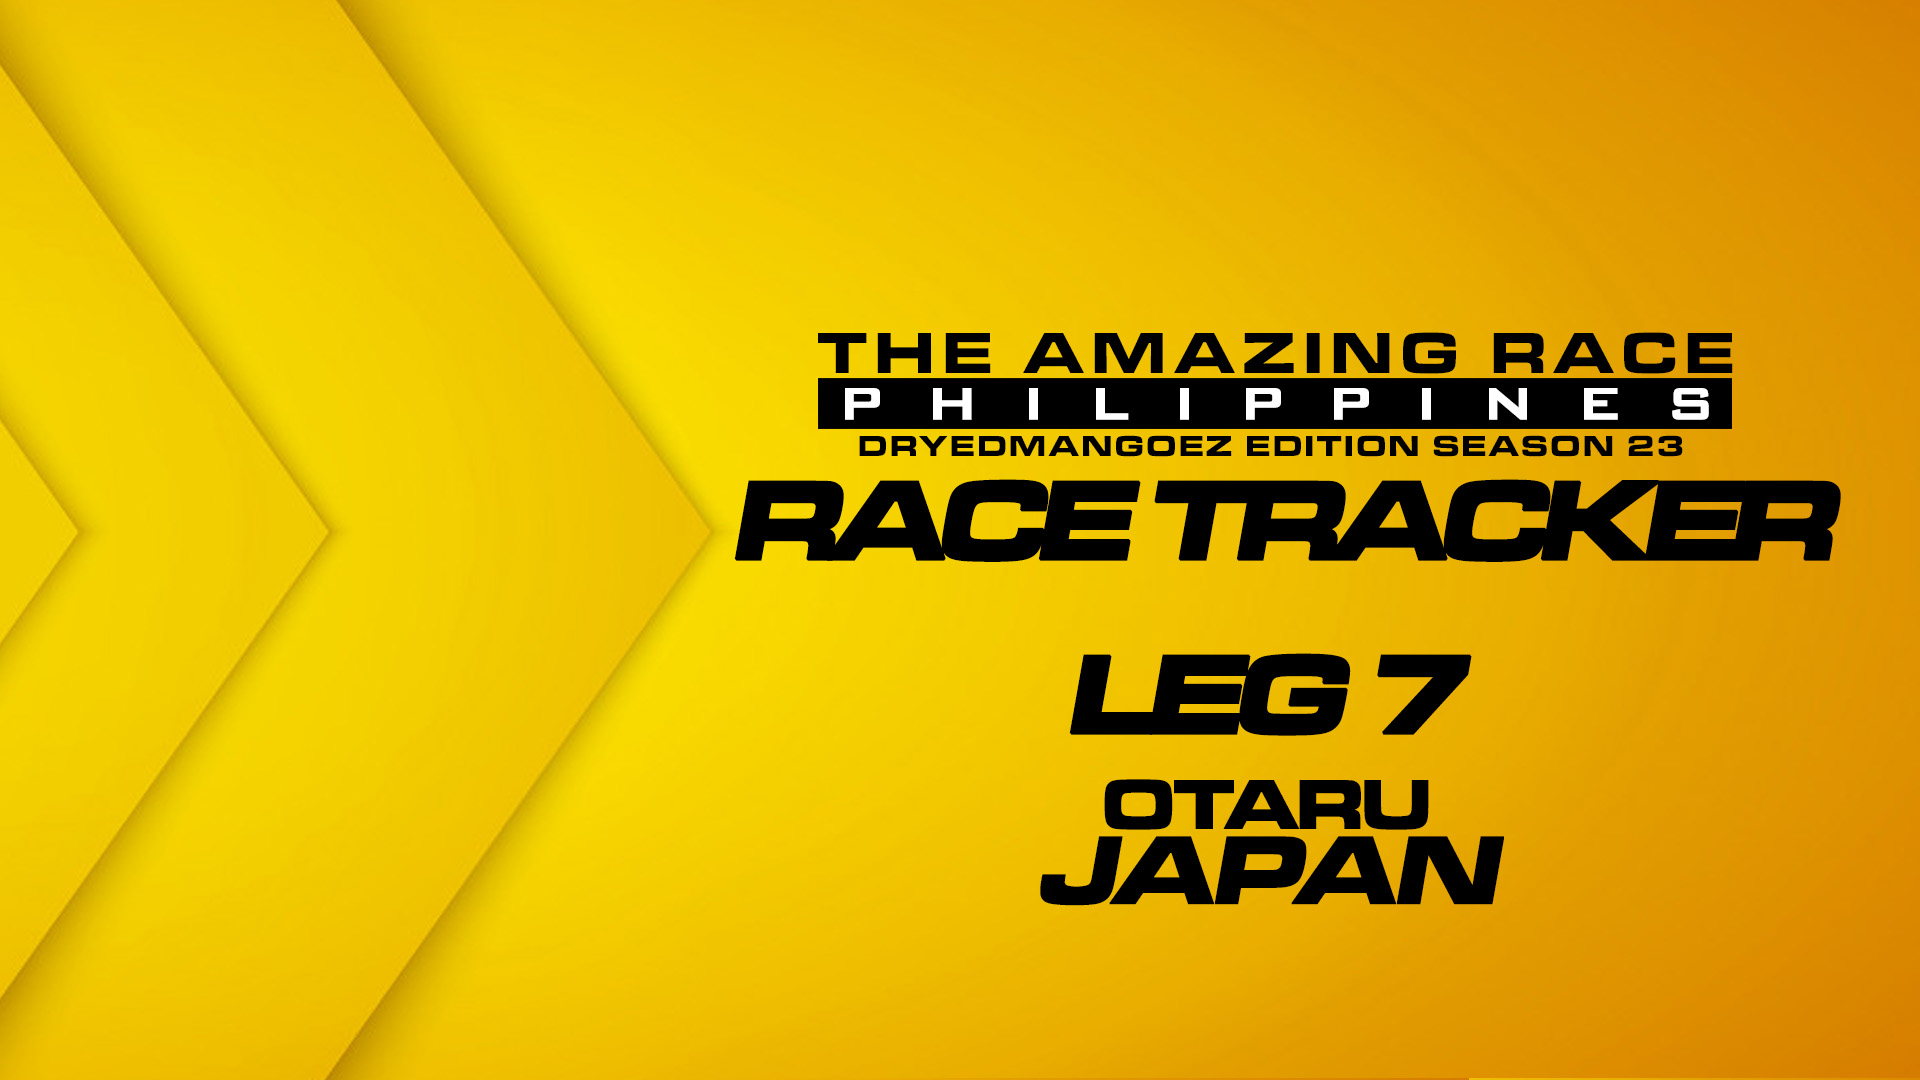 The Amazing Race Philippines: DryedMangoez Edition Season 23 Race Tracker – Leg 7